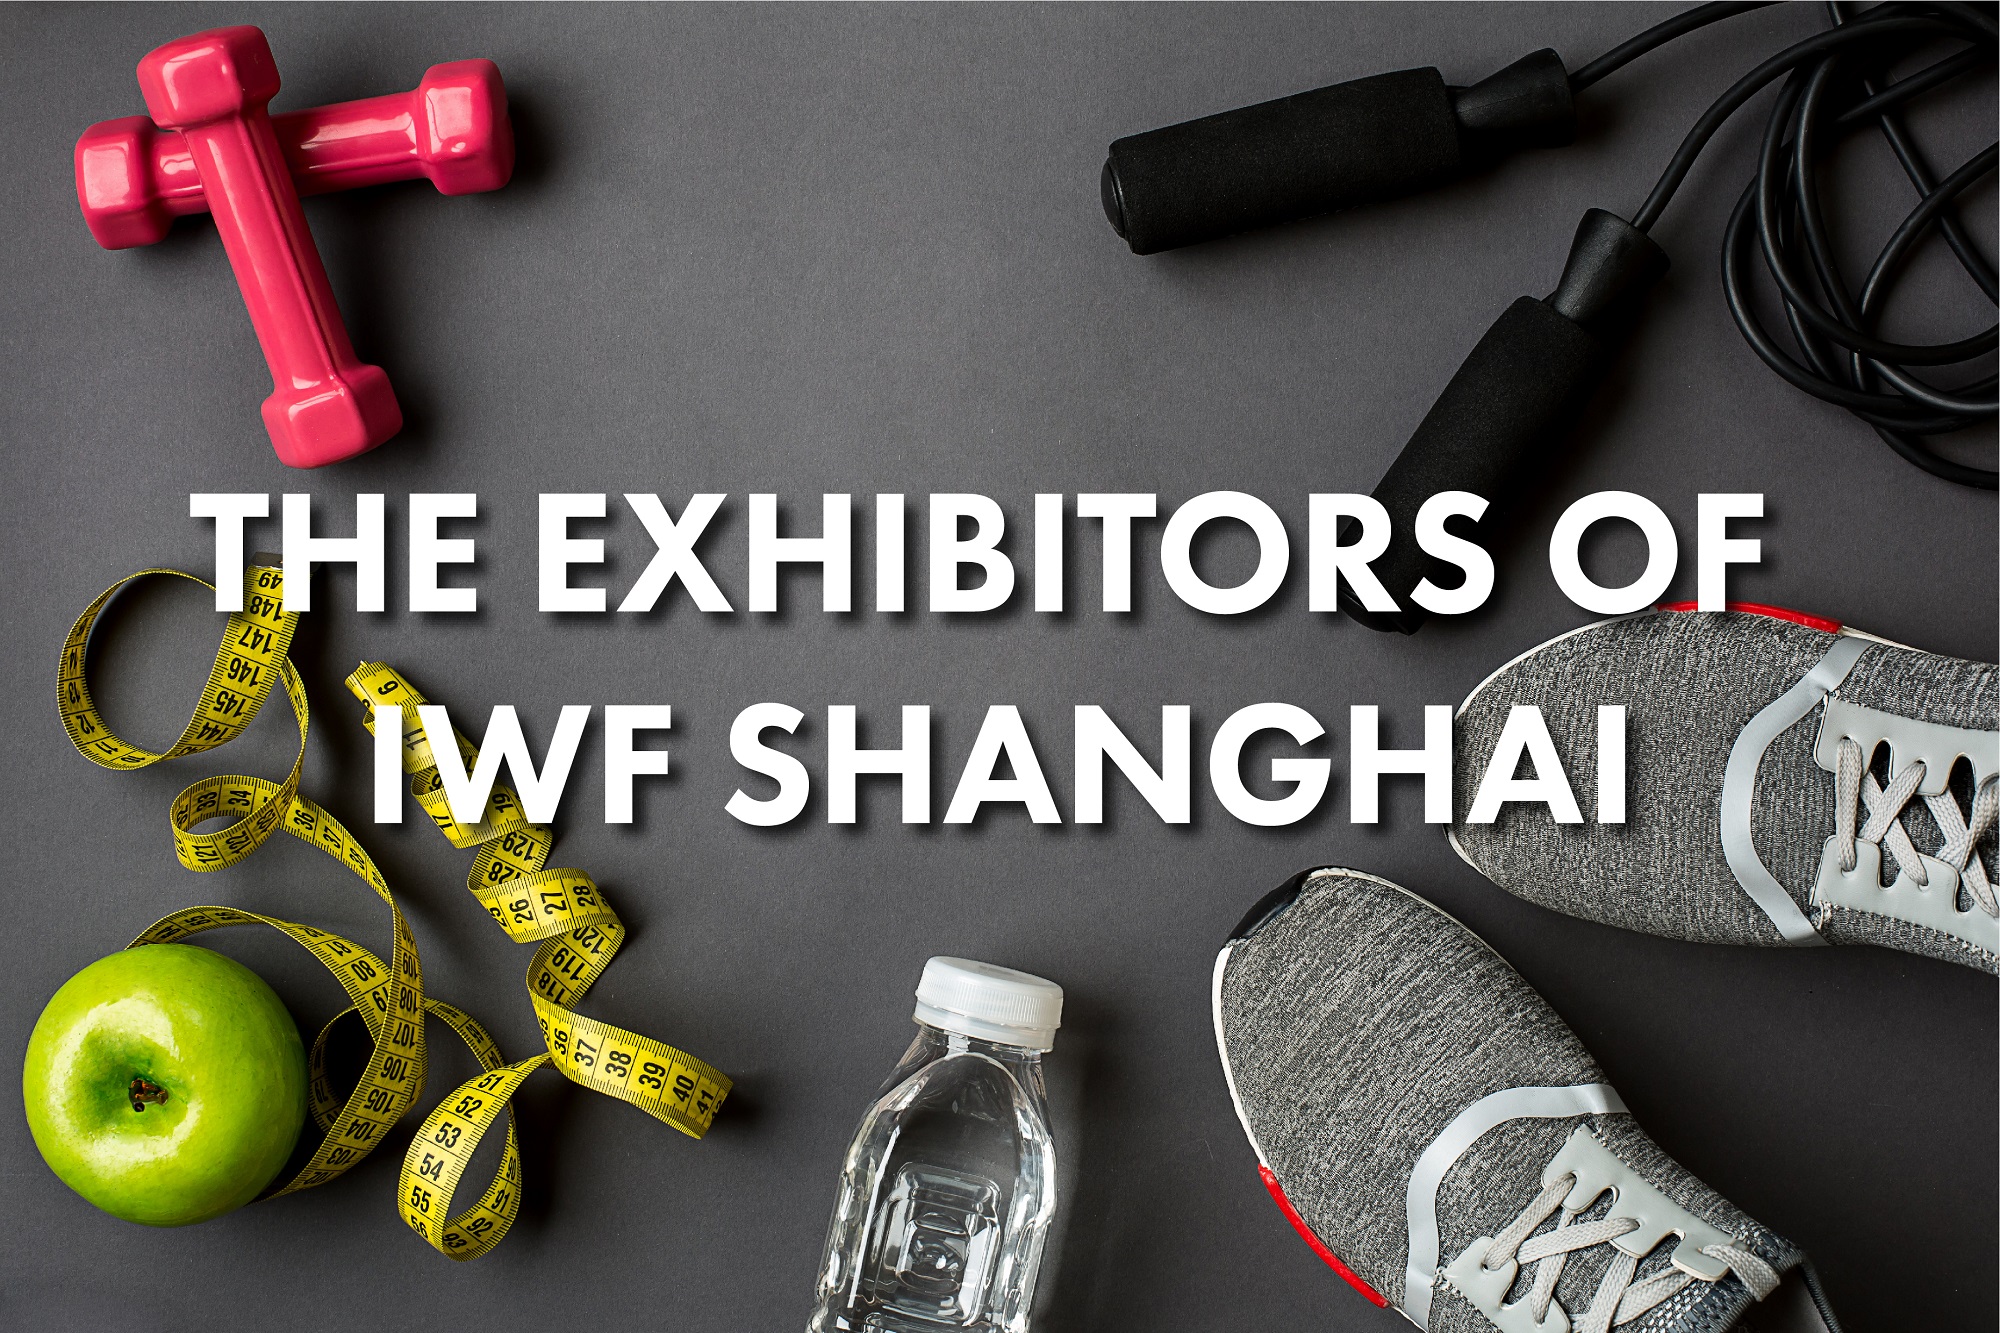 IWF SHANGHAI-da sərgi iştirakçıları